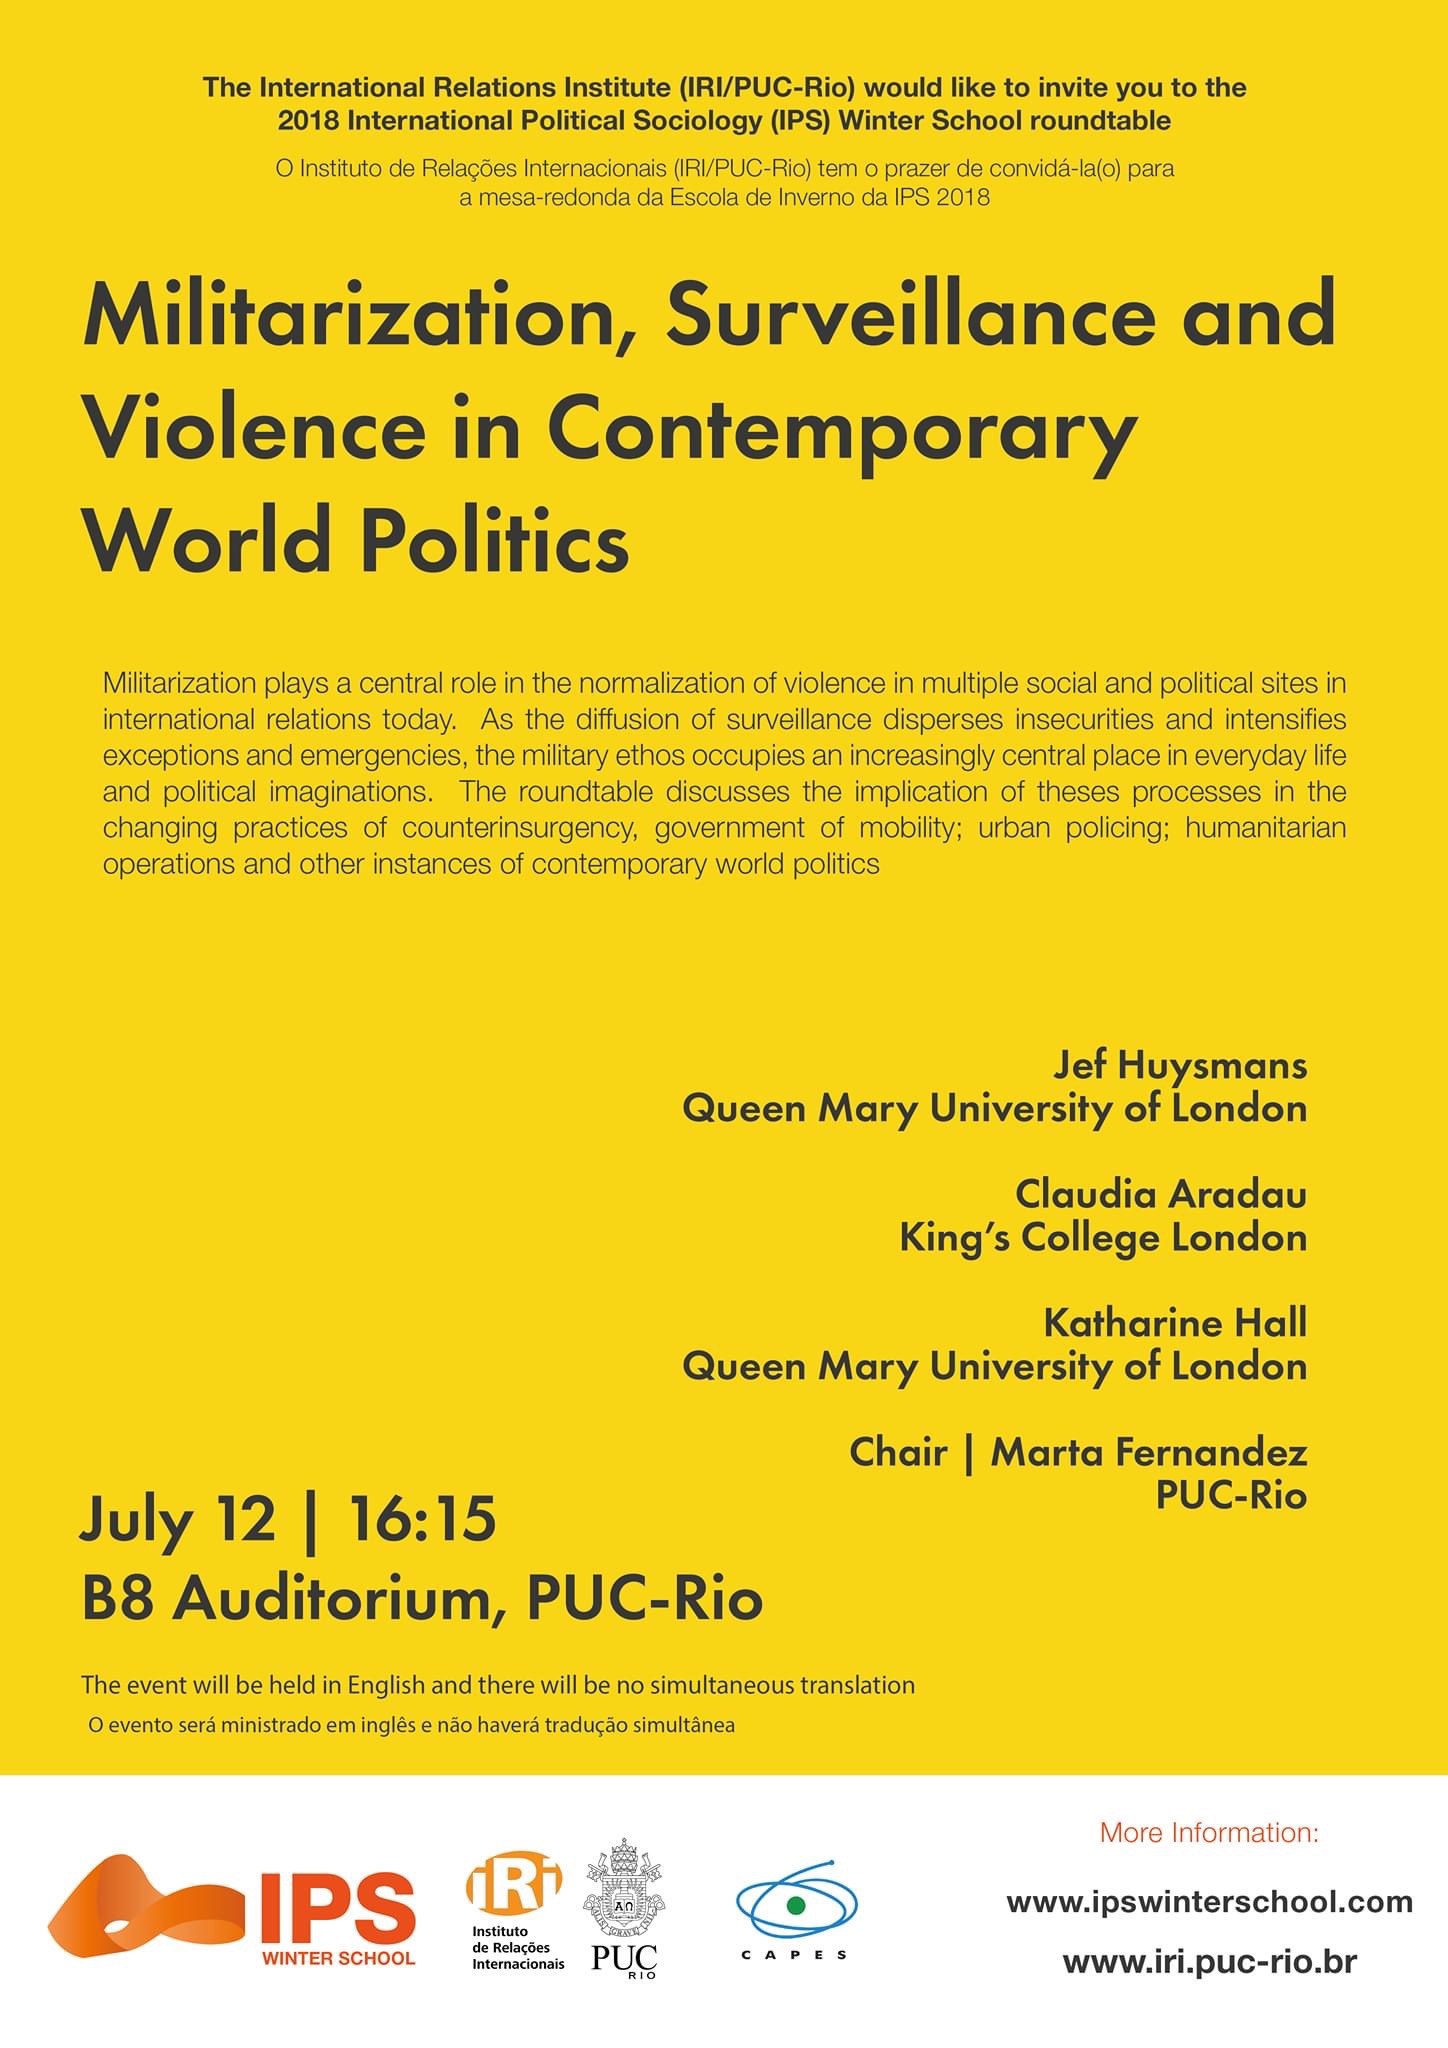 Militarization, Surveillance and Violence in Contemporary World Politics